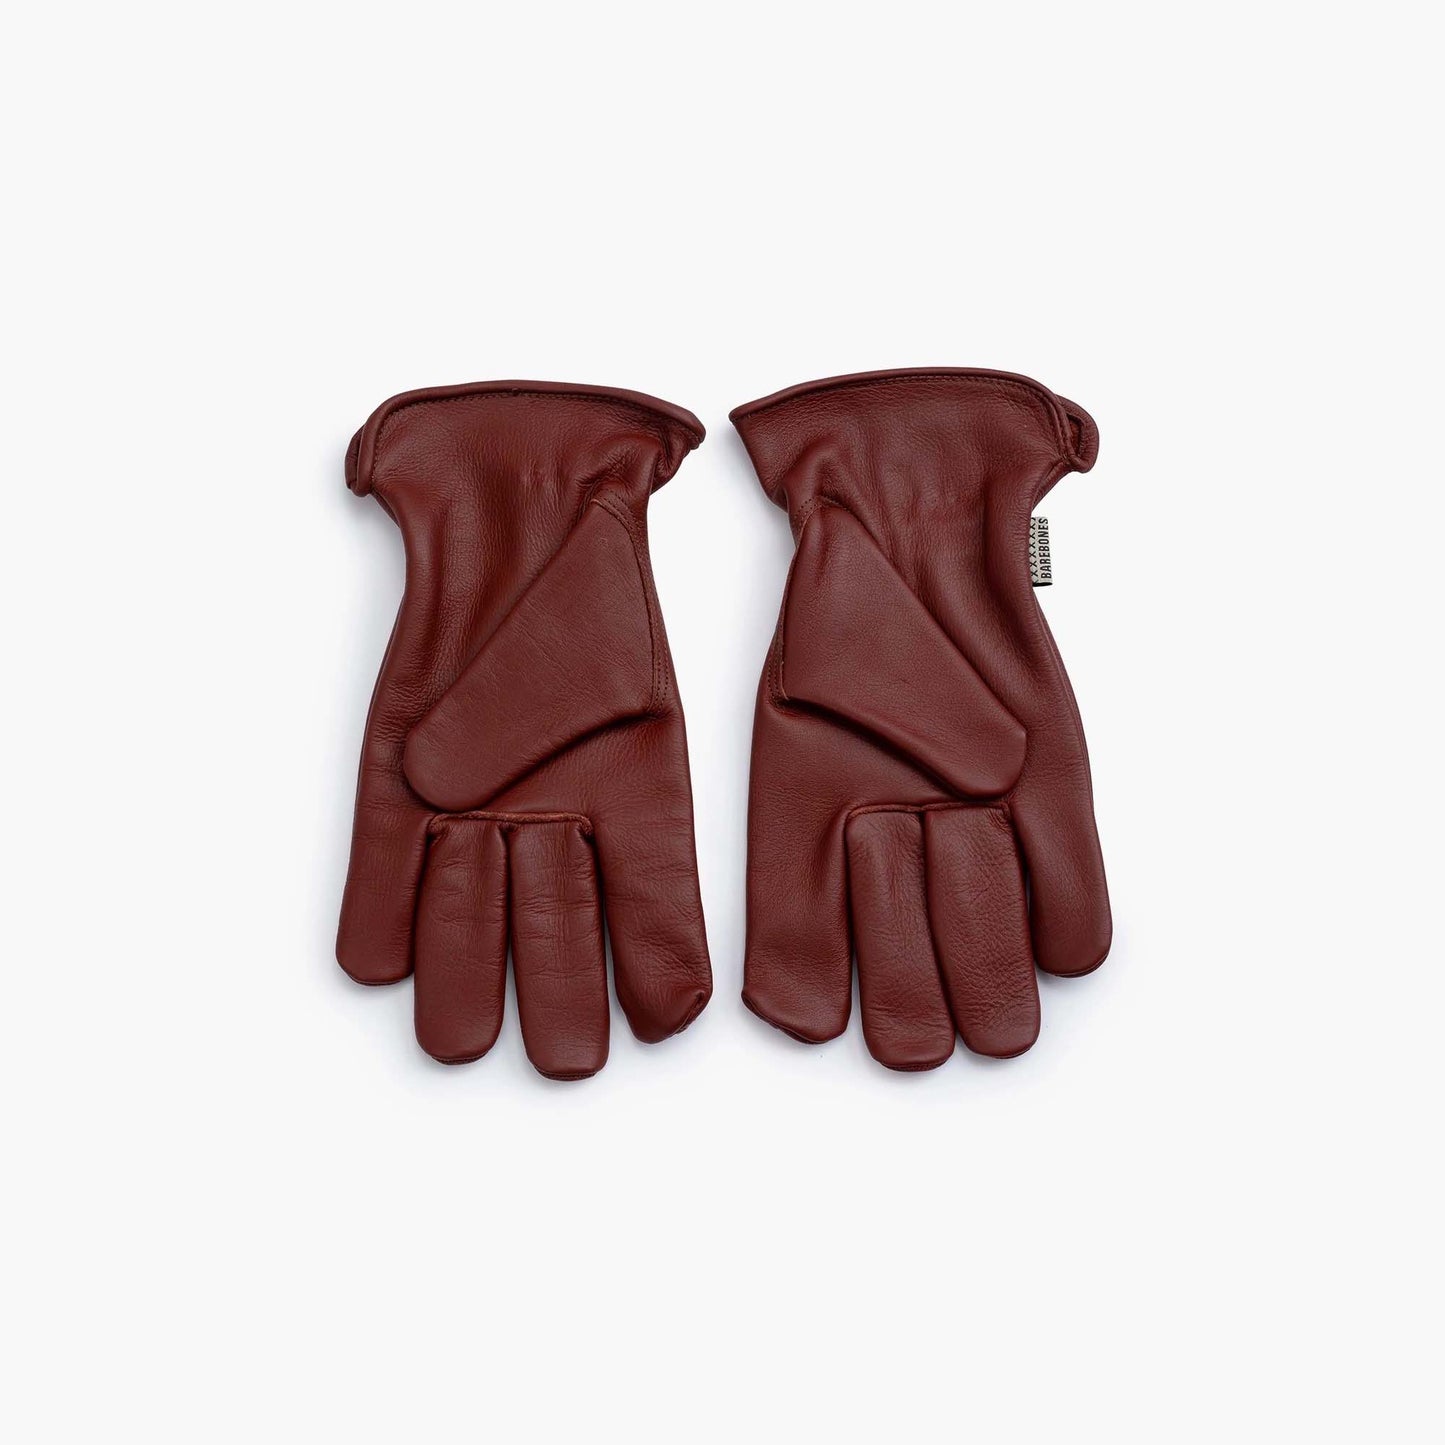 Cognac Work Gloves, Medium